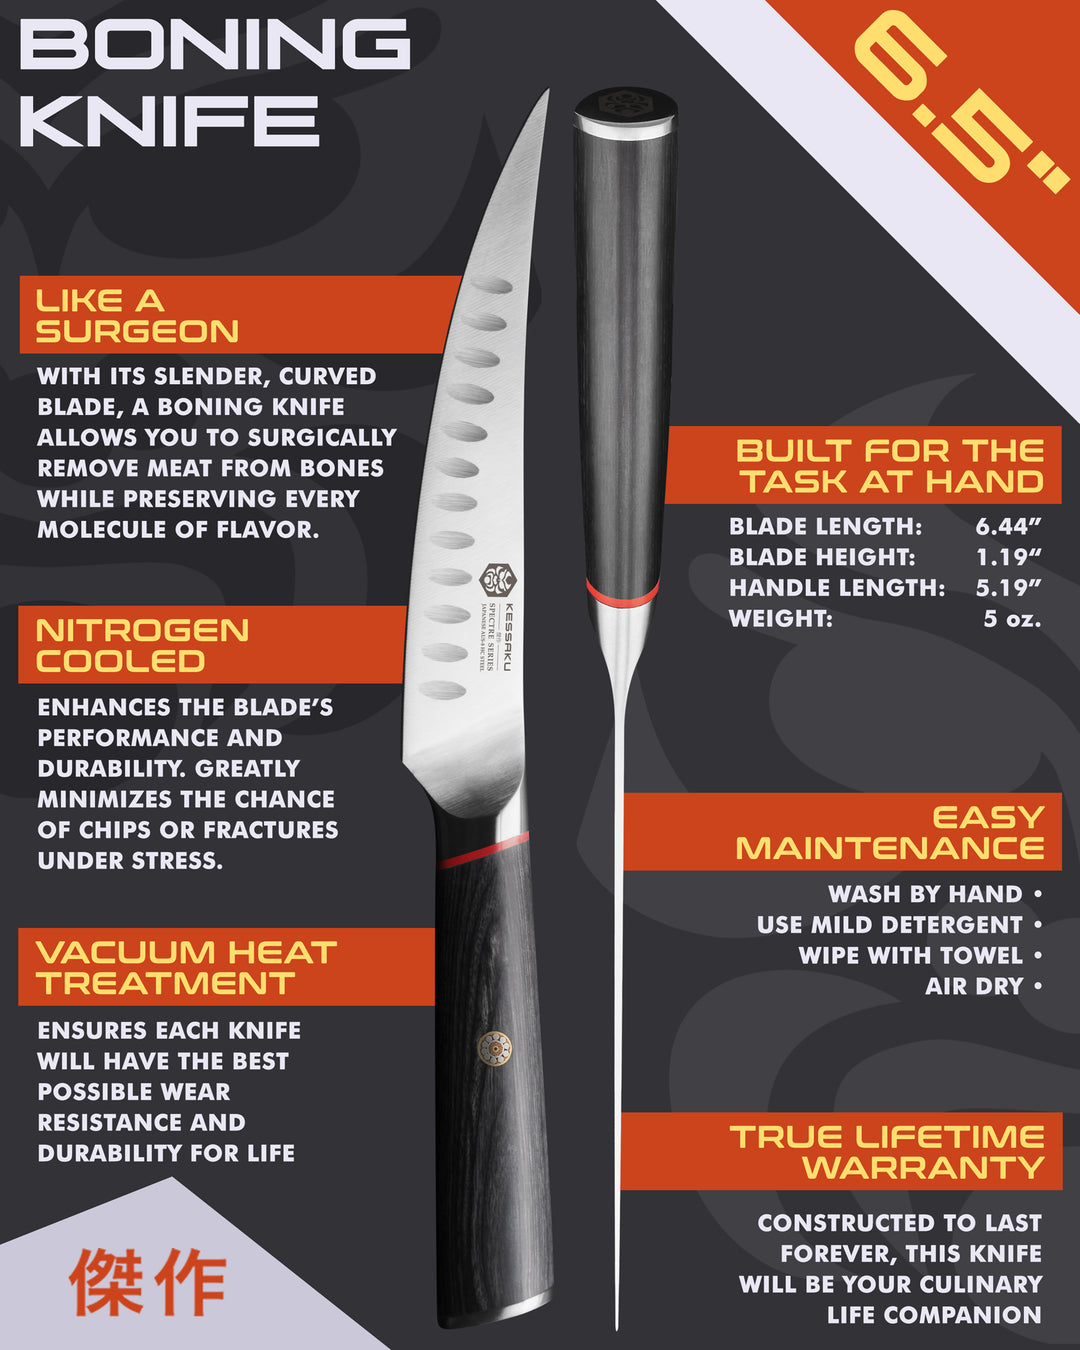 Kessaku Spectre Boning Knife uses, dimensions, maintenance, warranty info, and additional blade treatments